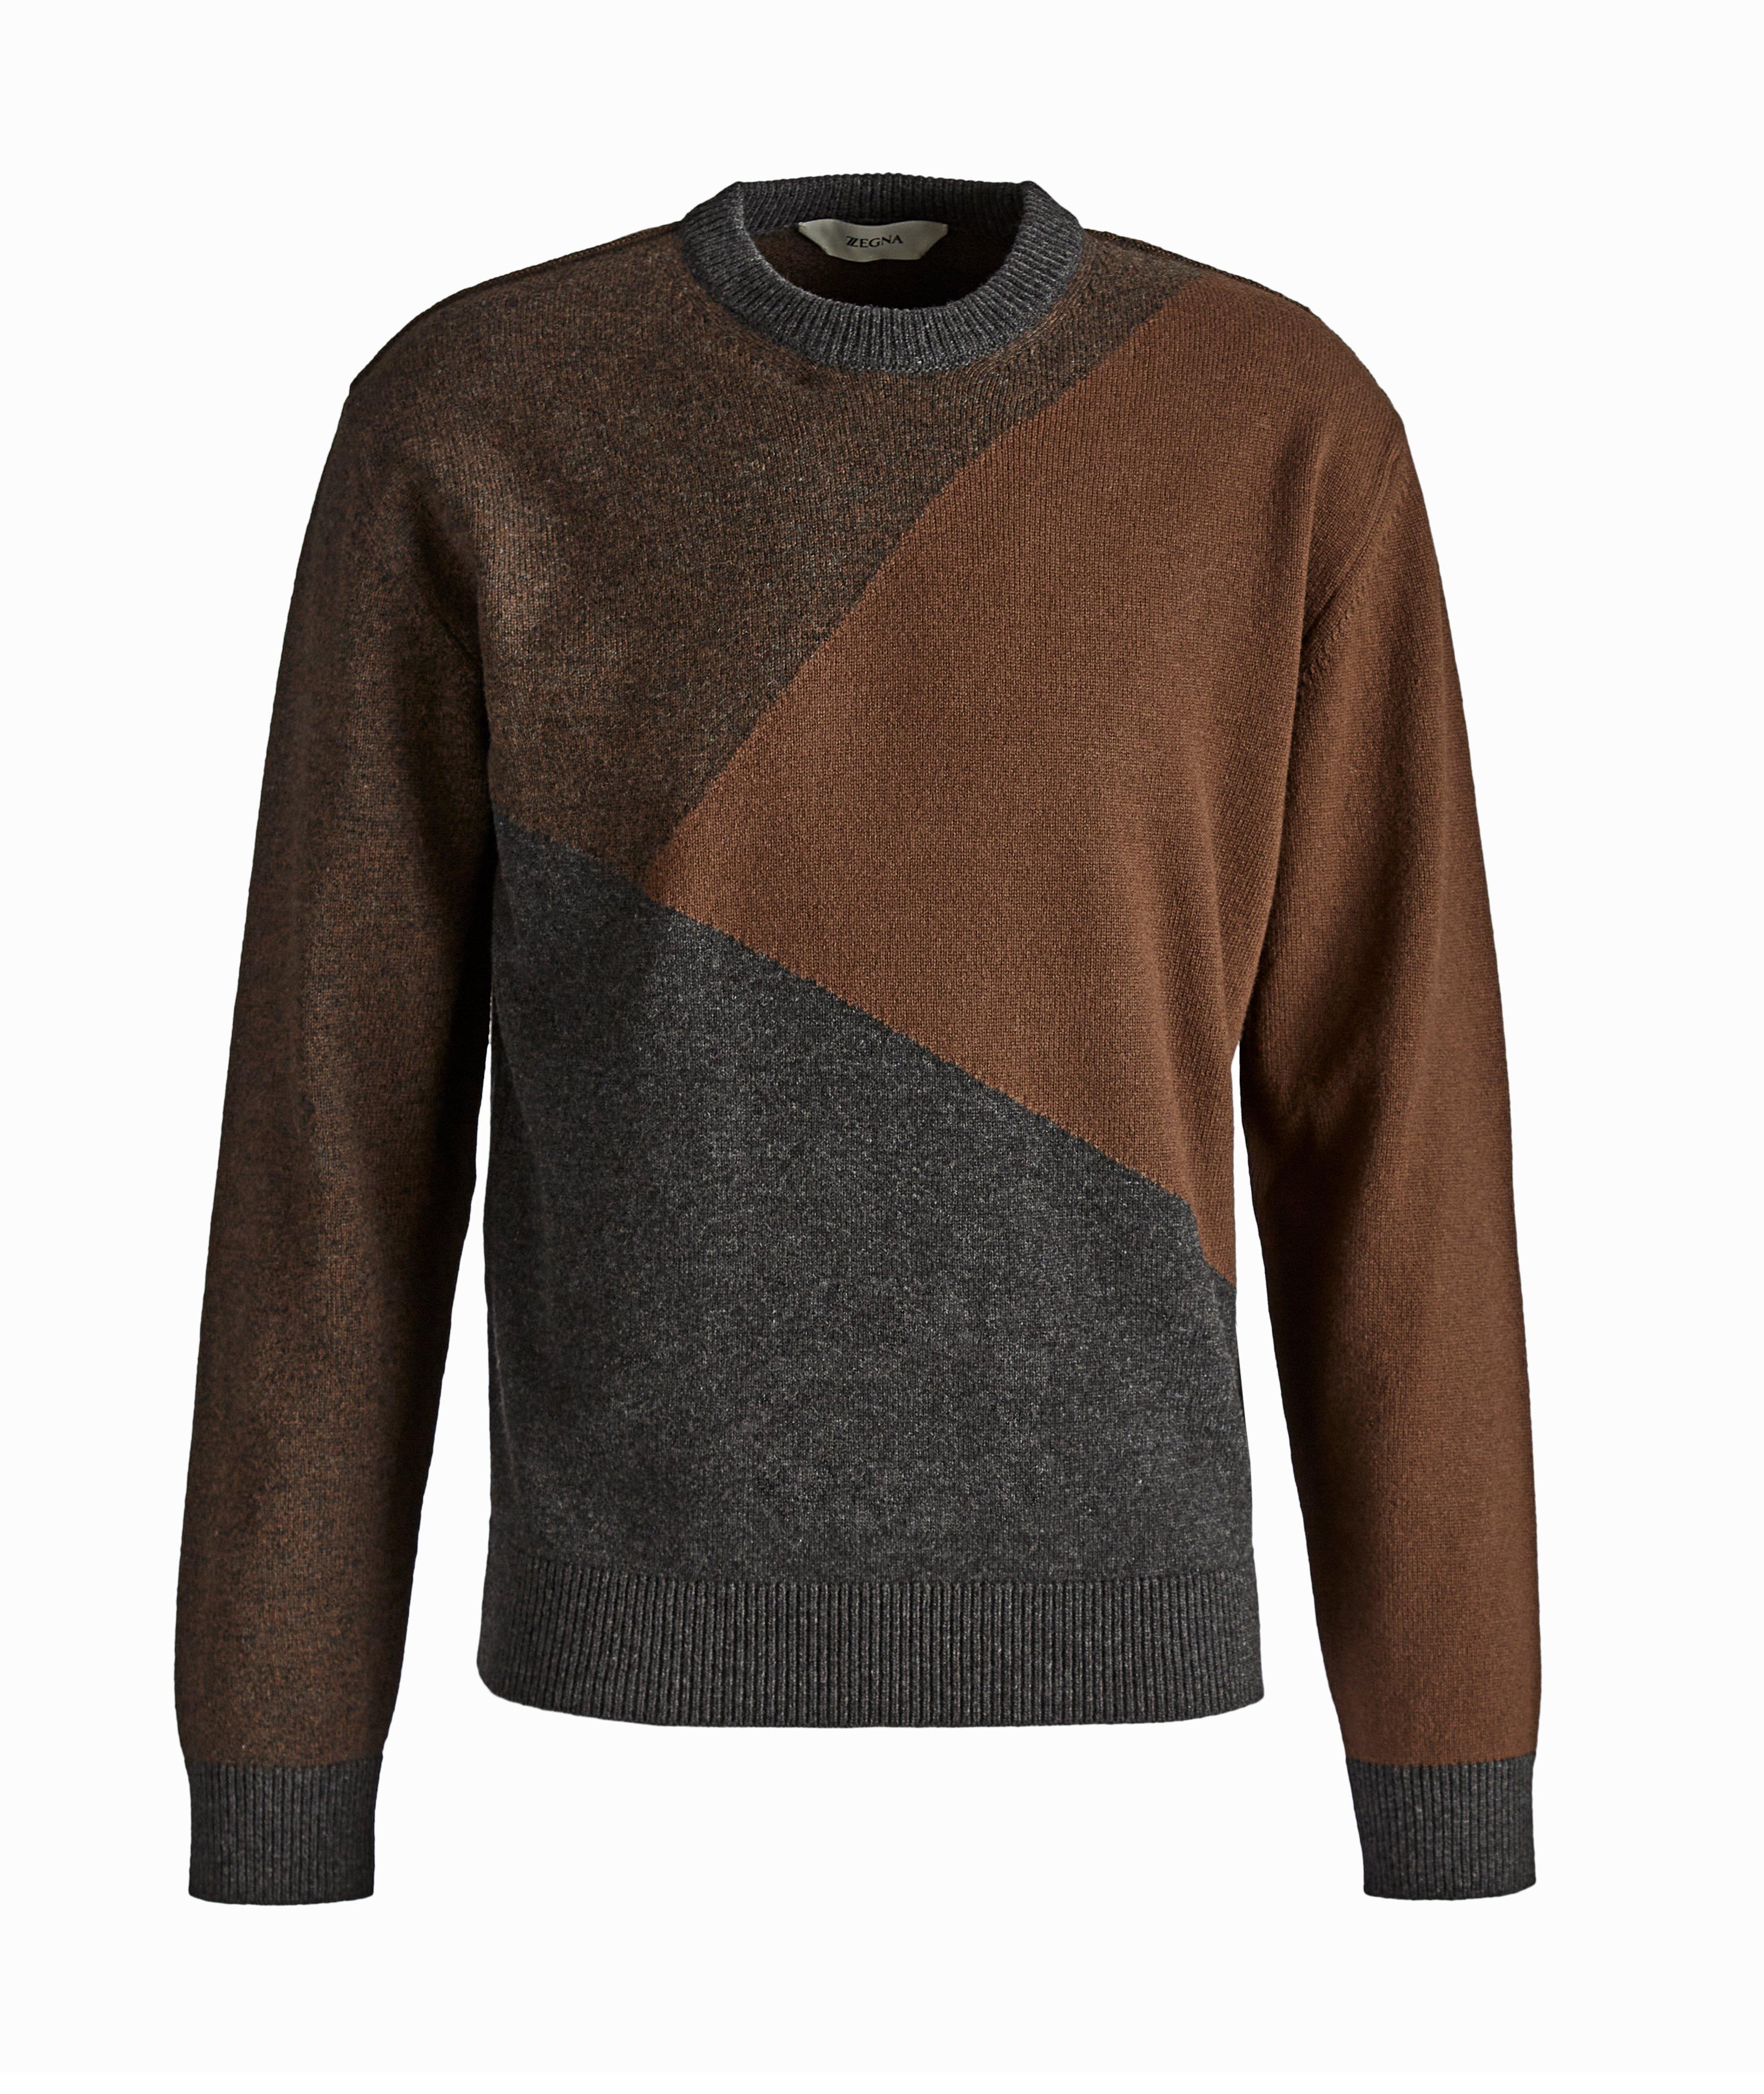 Colourblocked Wool Sweater image 0